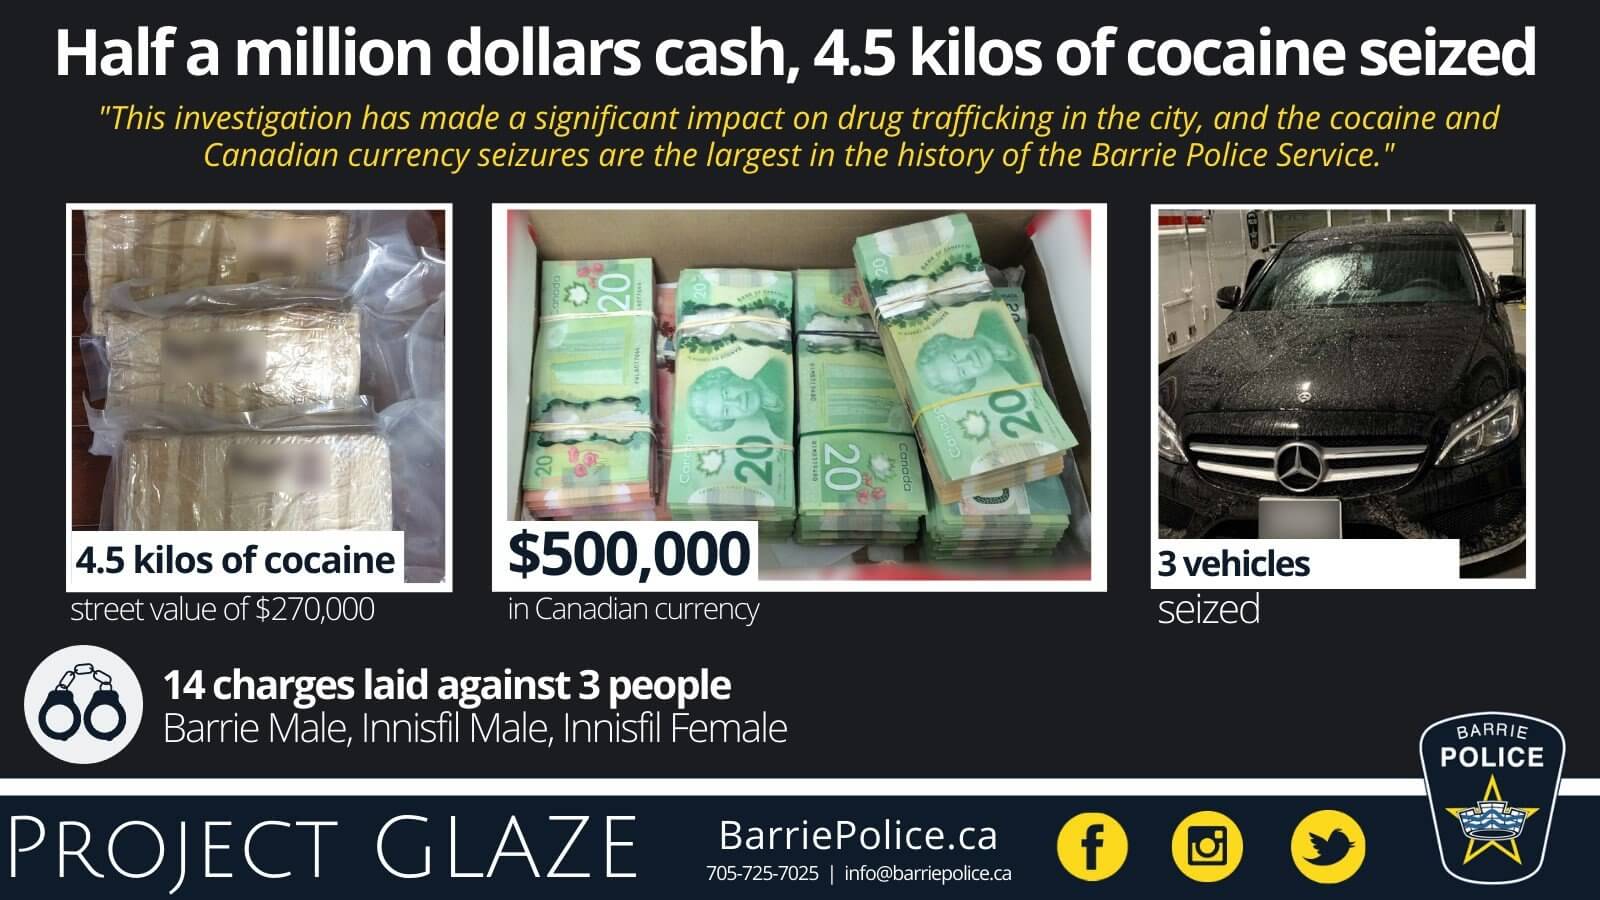 Project Glaze - half a million dollars cash, 4.5 kilos of cocaine seized. 14 charges laid against 3 people